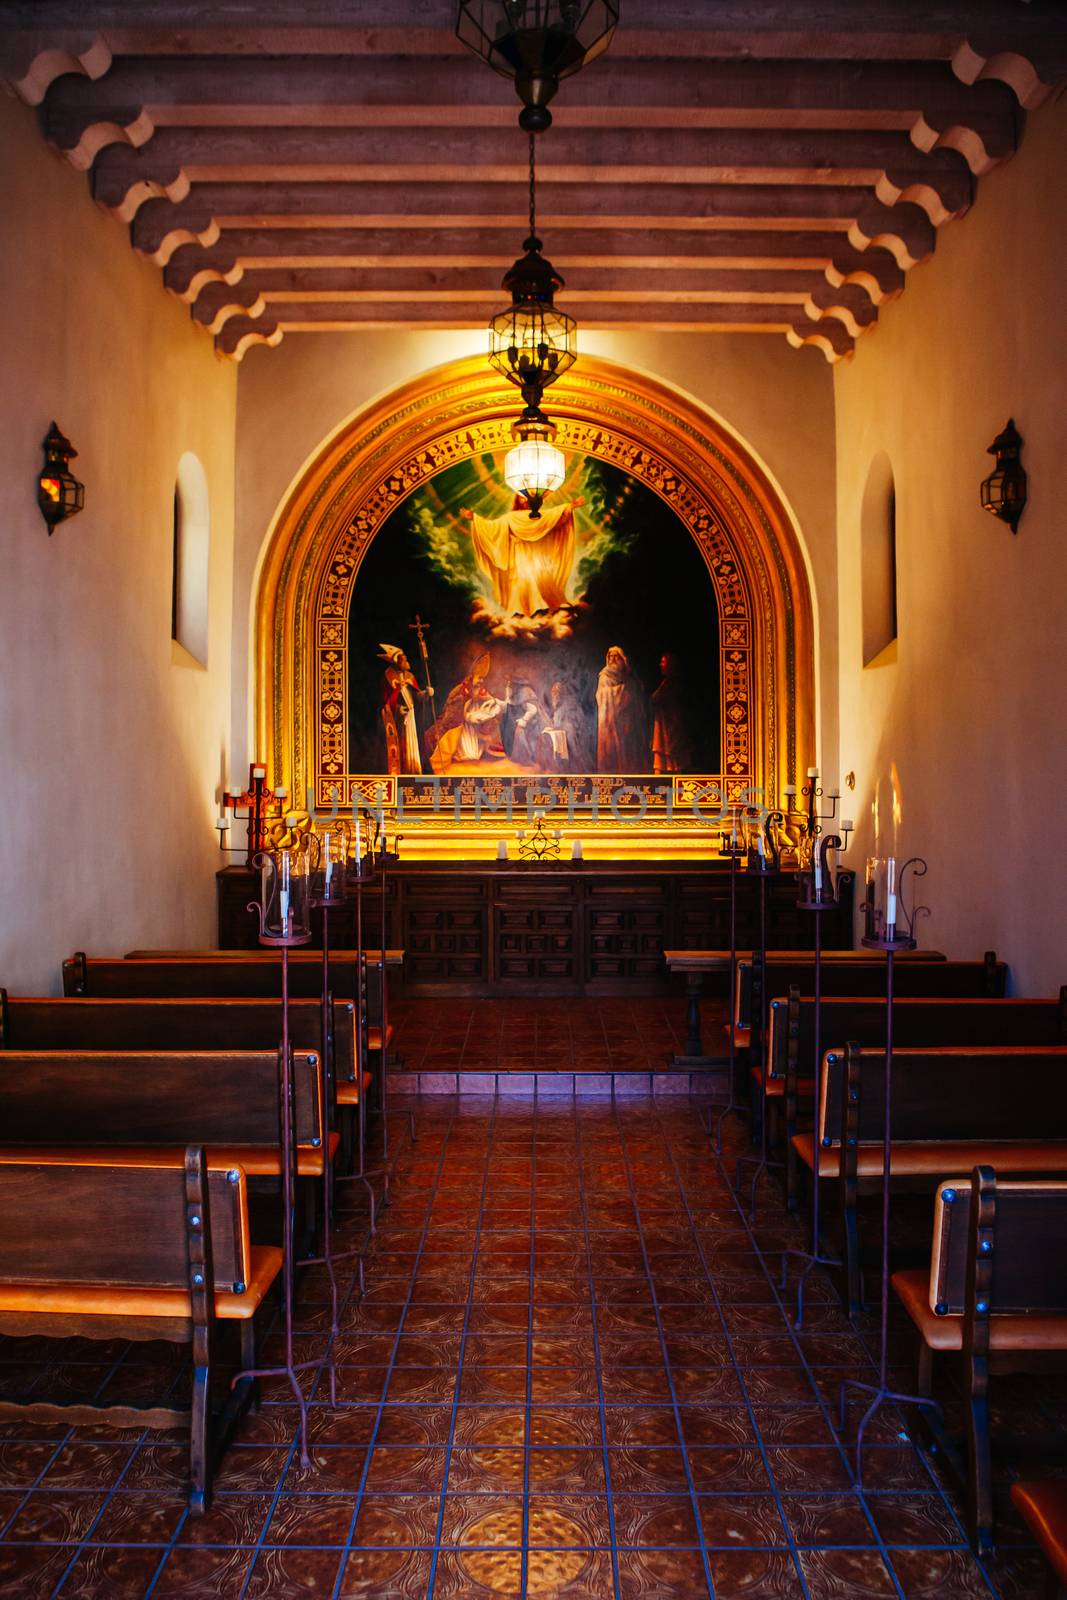 Sedona, USA - February 4 2013: The iconic Tlaquepaque Arts & Crafts Village and church interior with stunning architecture in Sedona, Arizona, USA